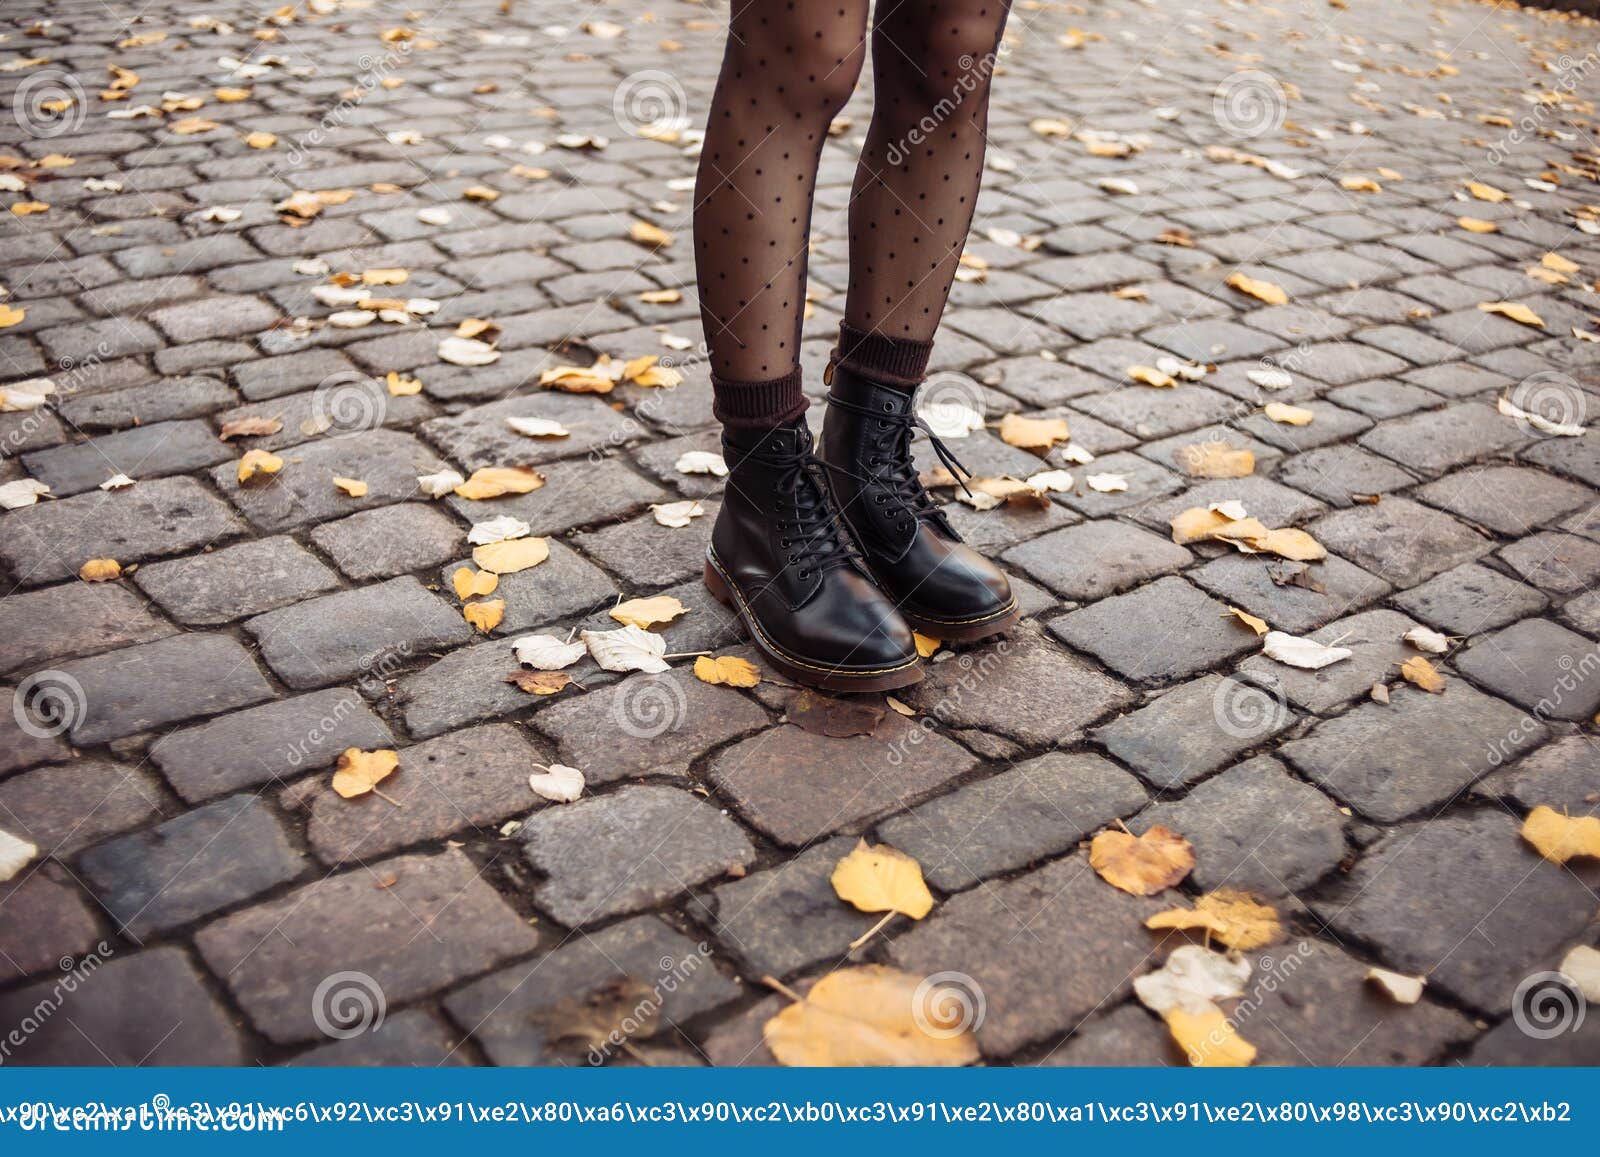 Lein in boots stock image. Image of lady, fallen, footwear - 206218969